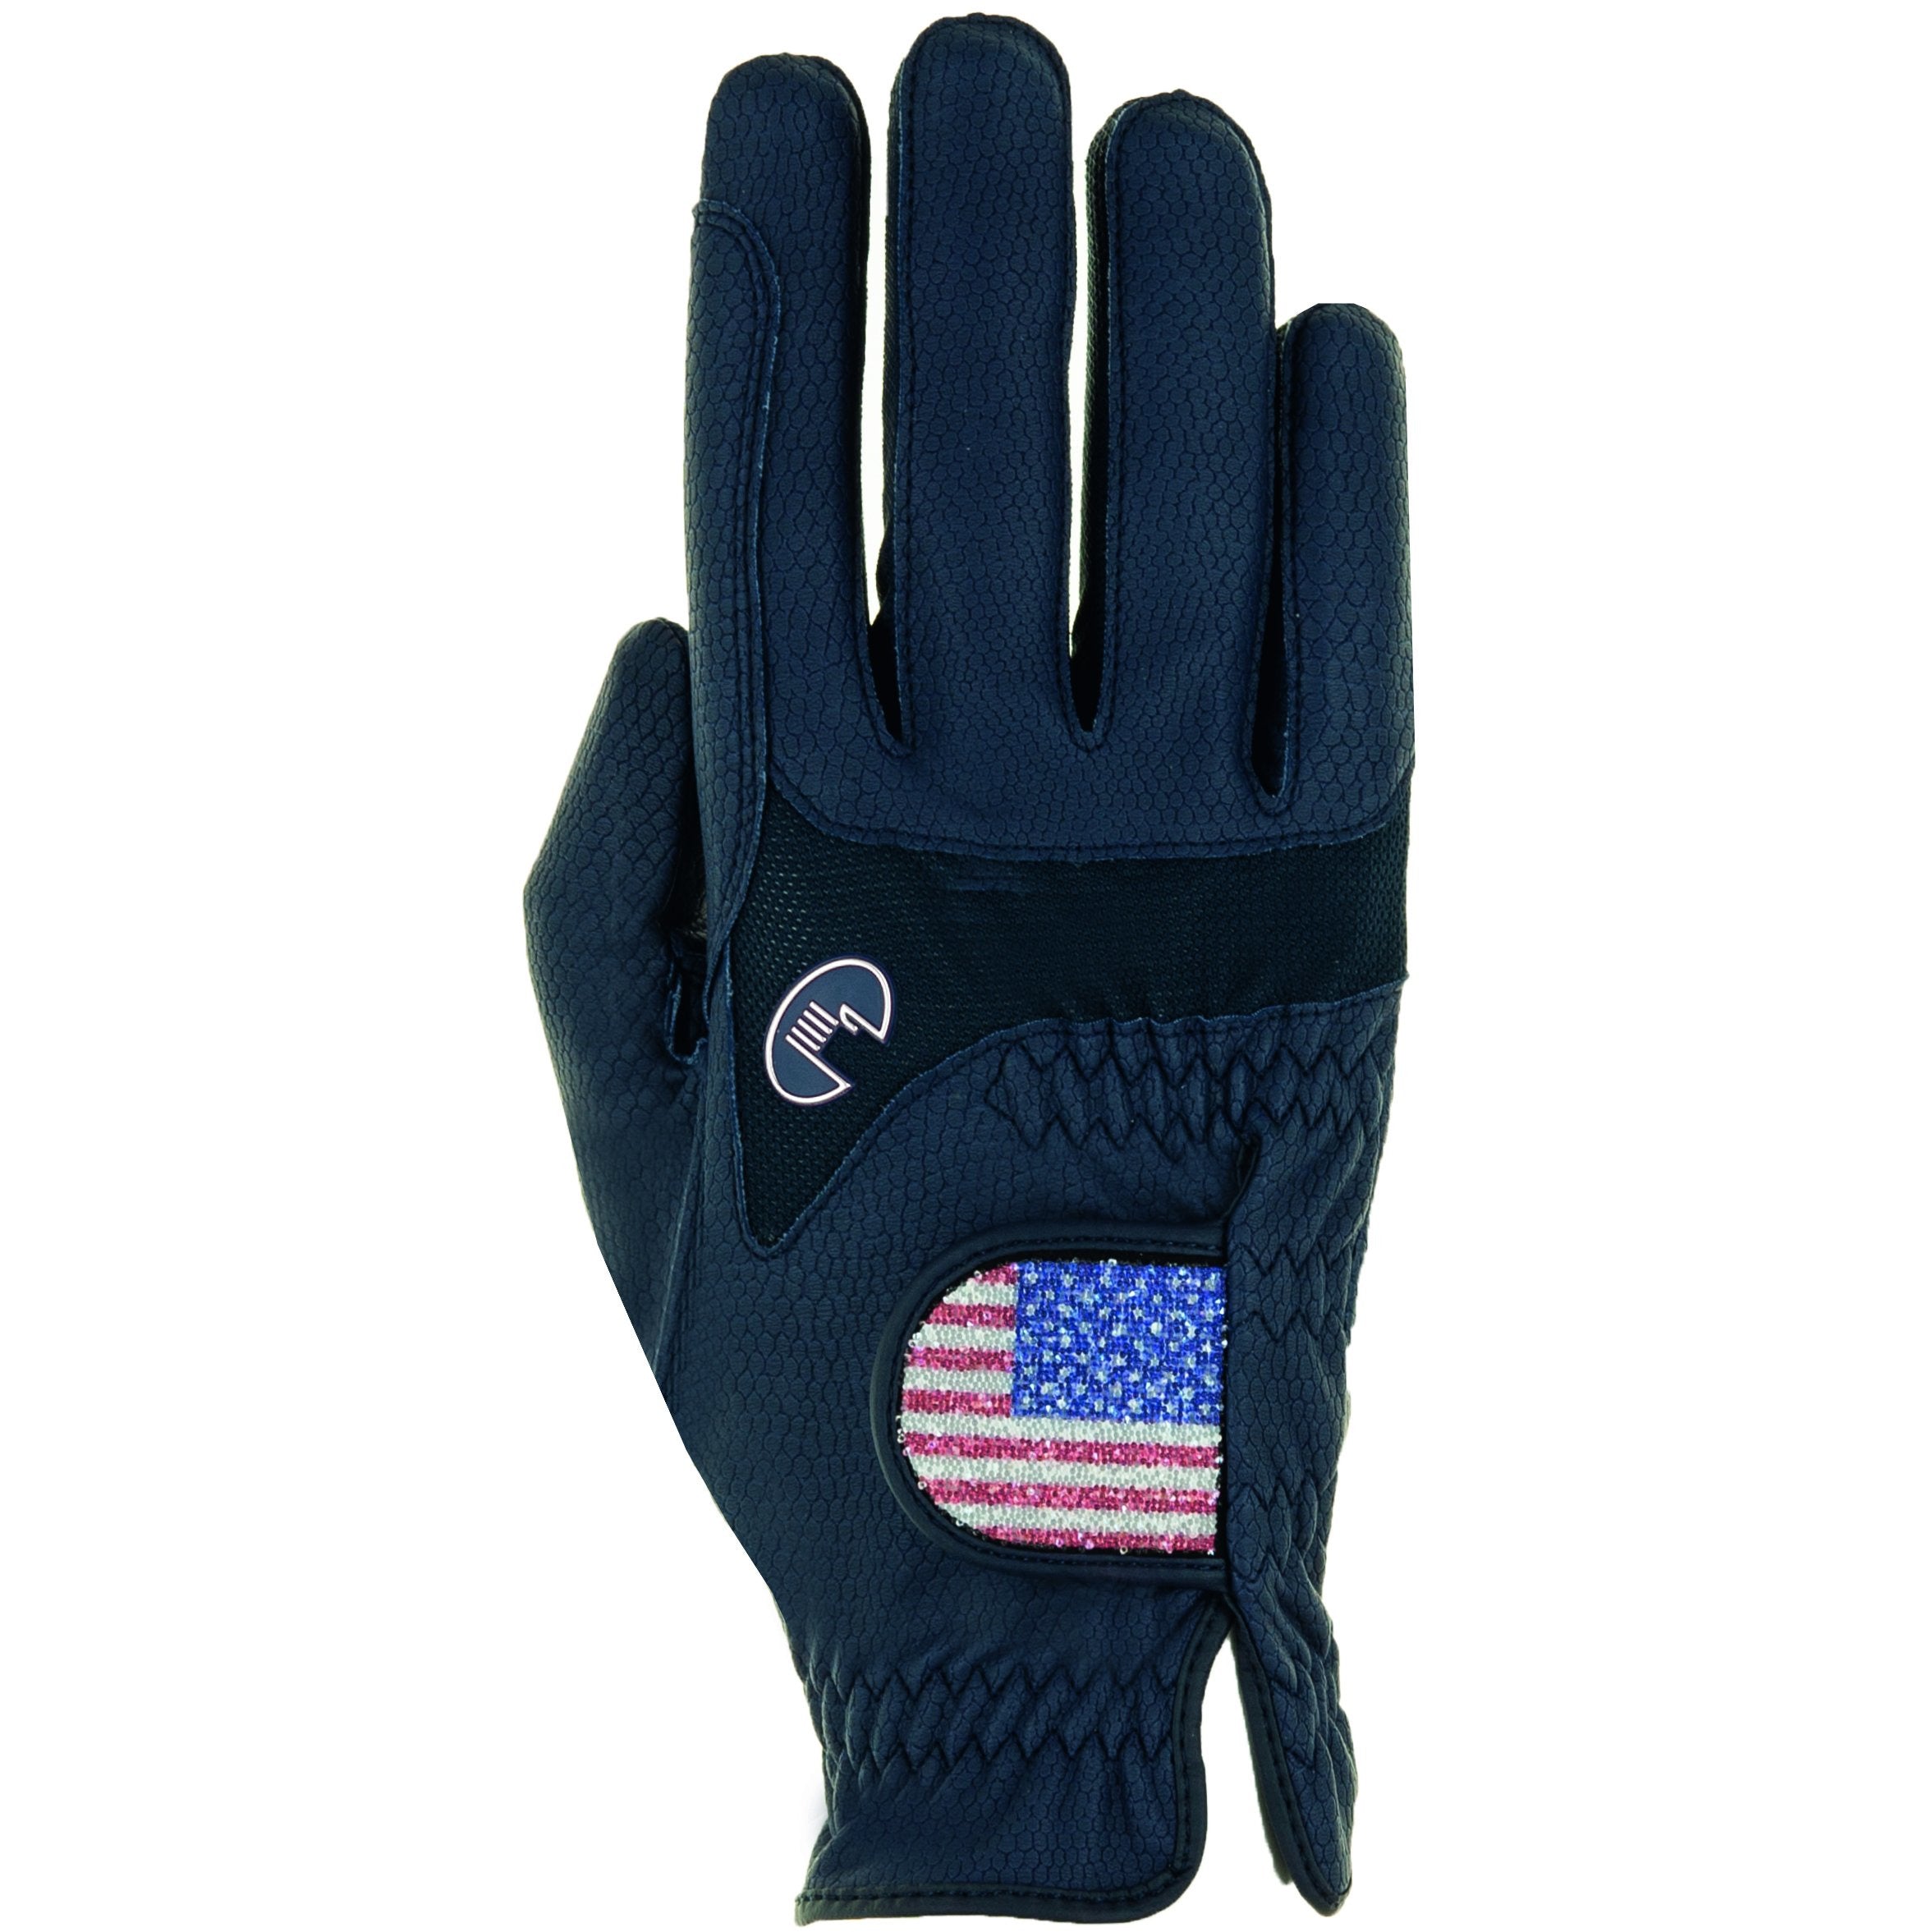 Roeckl Maryland Glove - USA